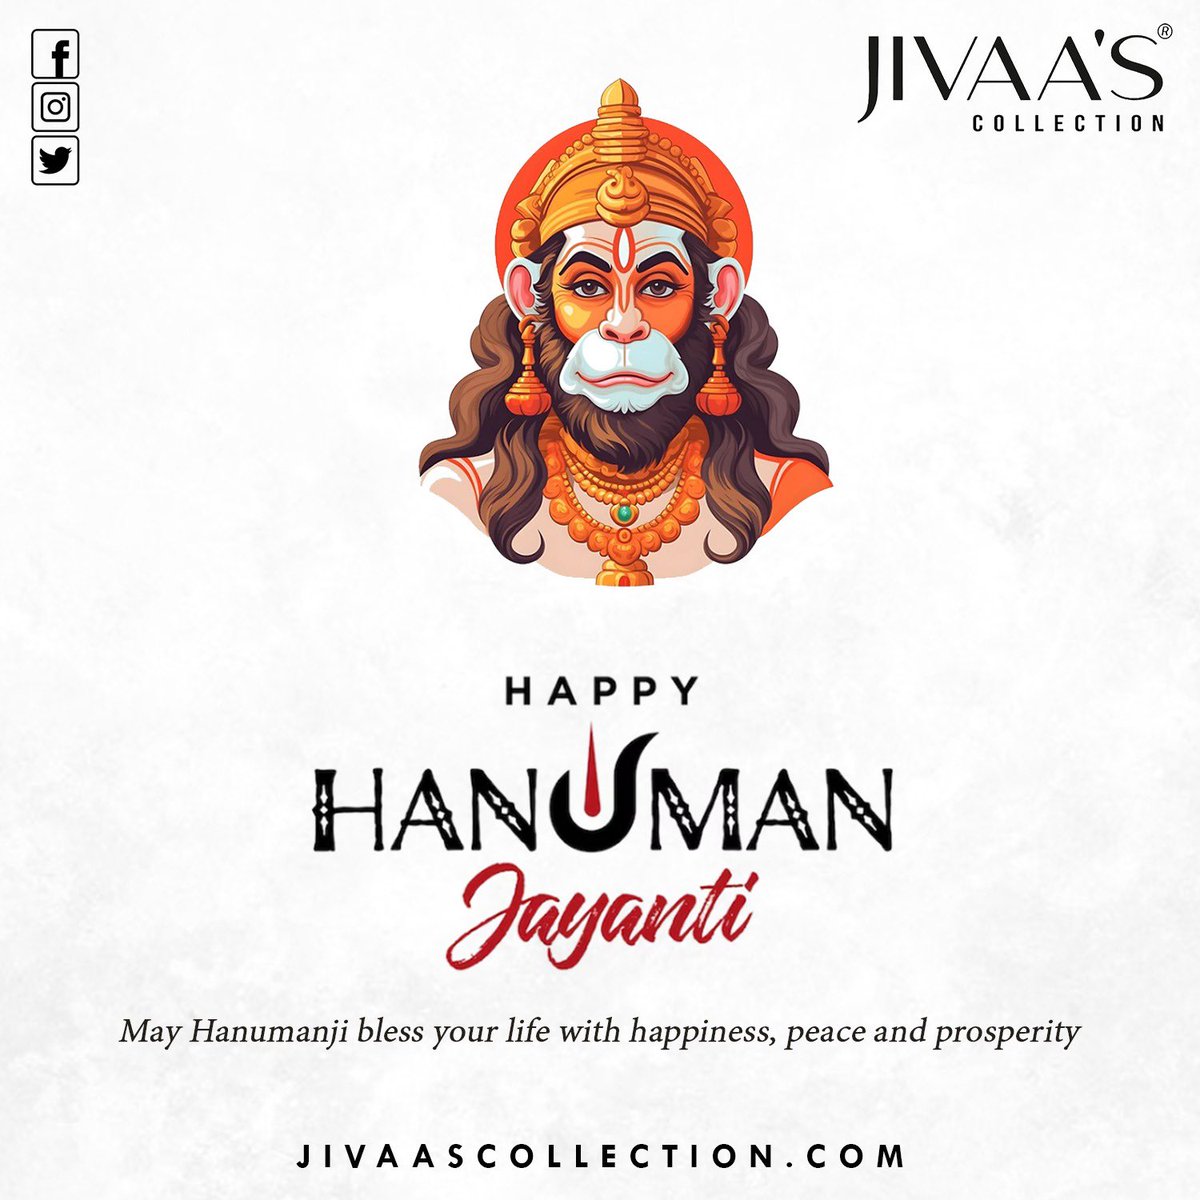 May Hanumanji bless your life with happiness, peace and prosperity. Happy Hanuman Jayanti✨

#jivaas #JivaasCollection #instajewellery #indianjewellery #bollywoodfashion #customisejewellery #weddingjewellery #silverjewellery #rajkotjewellery #rajkot_diaries #statementjewelry